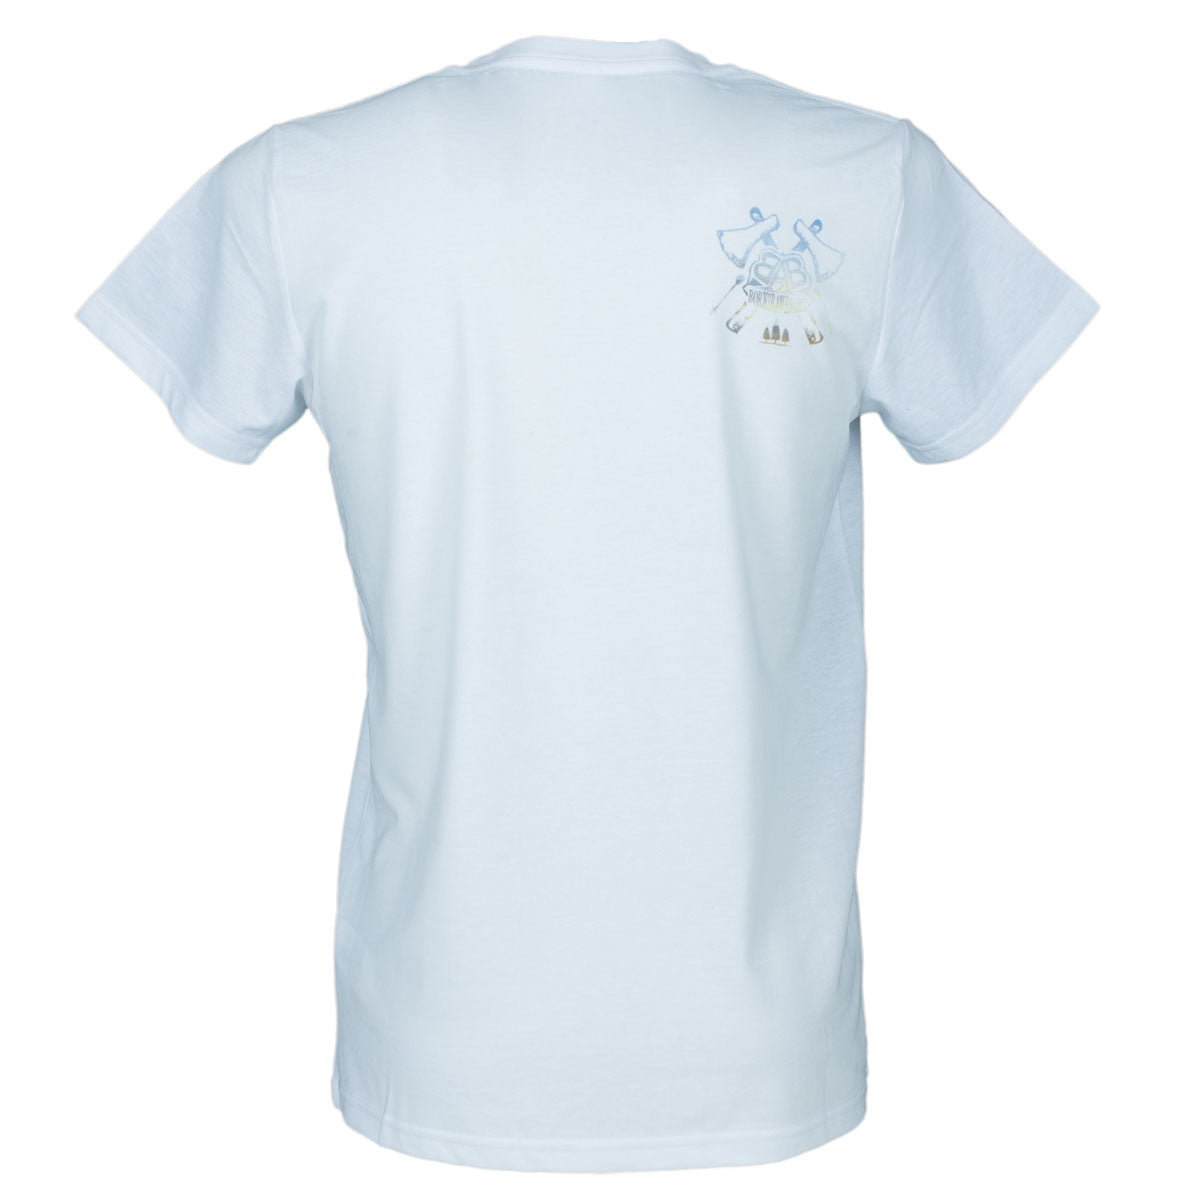 Indiskull T-Shirt - B2BA Clothing